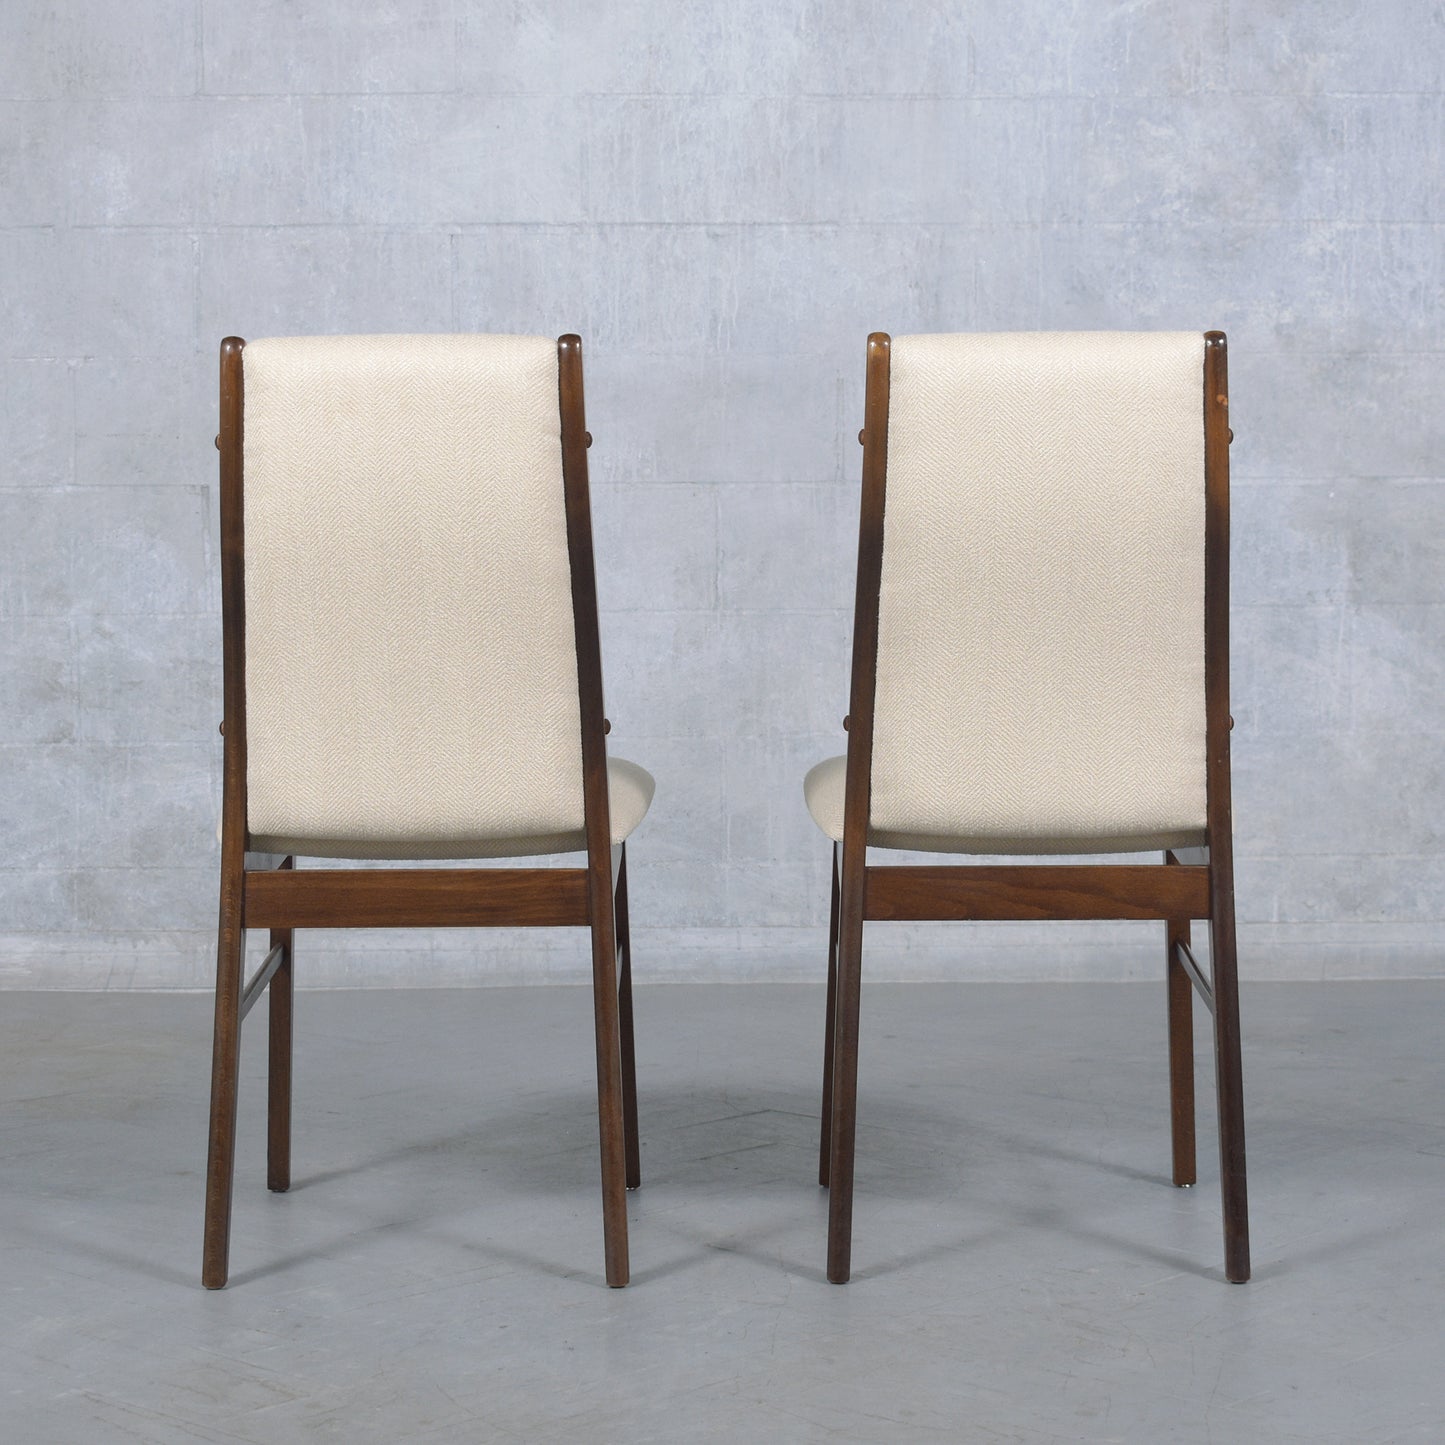 Restored Danish Modern Teak Dining Chairs: Sleek Elegance & Comfort